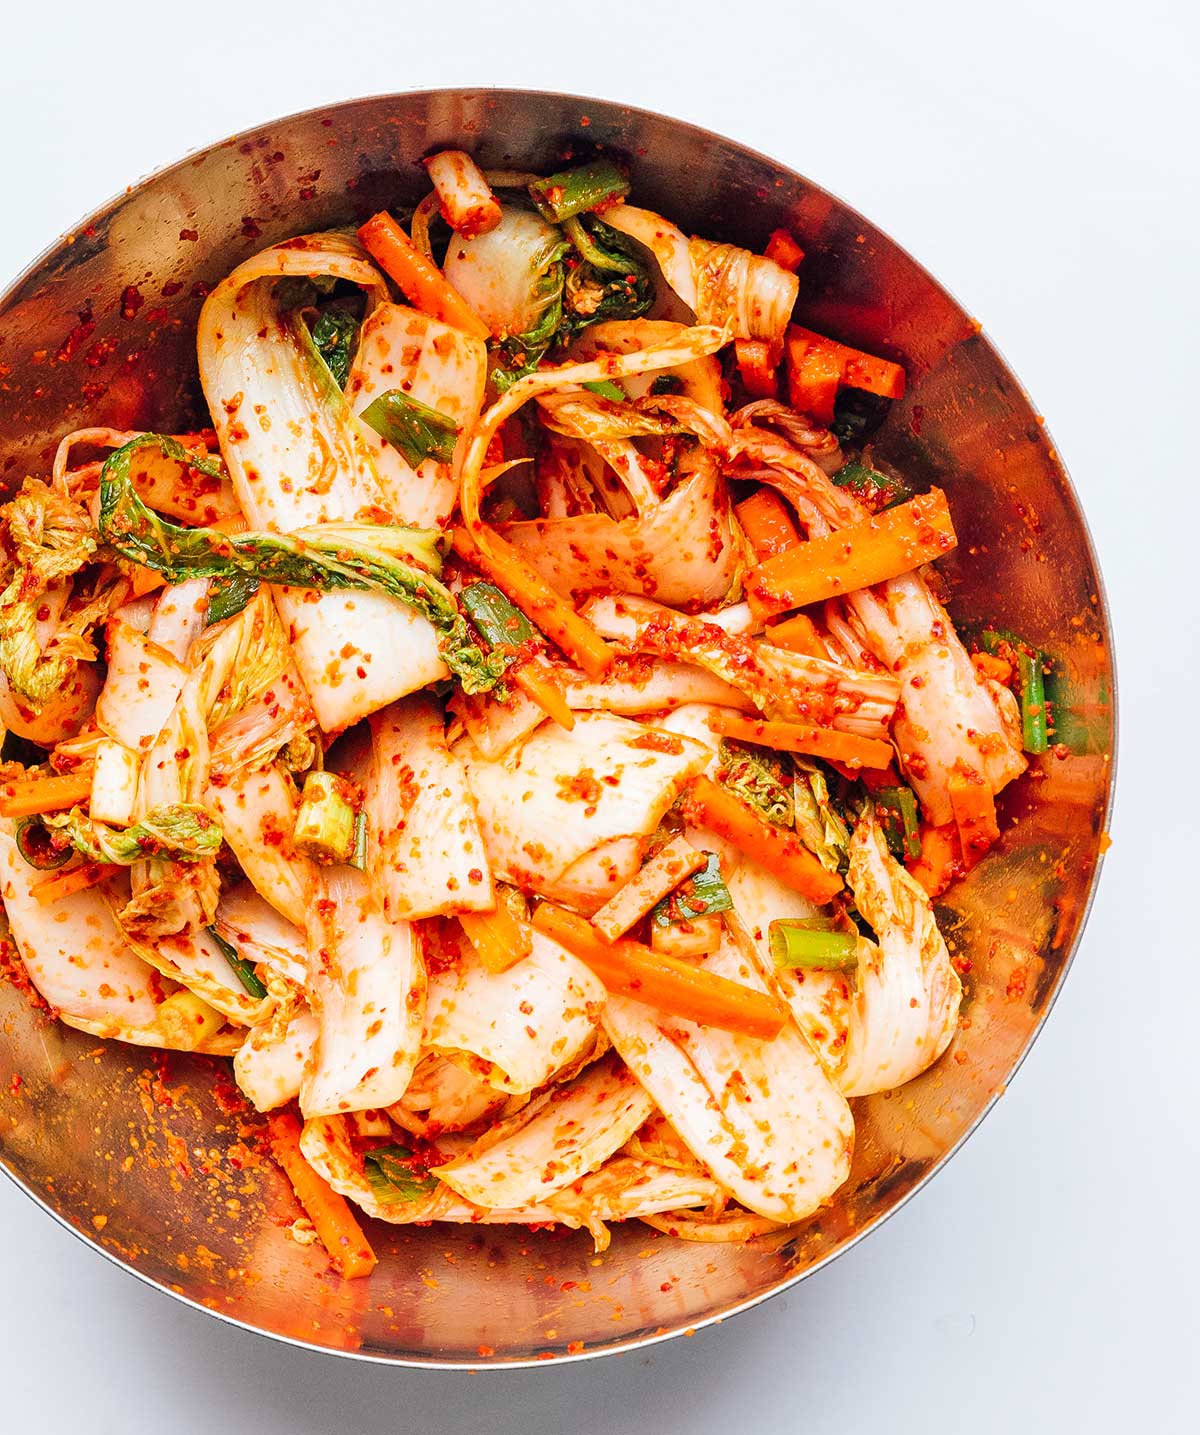 Kimchi in a bowl